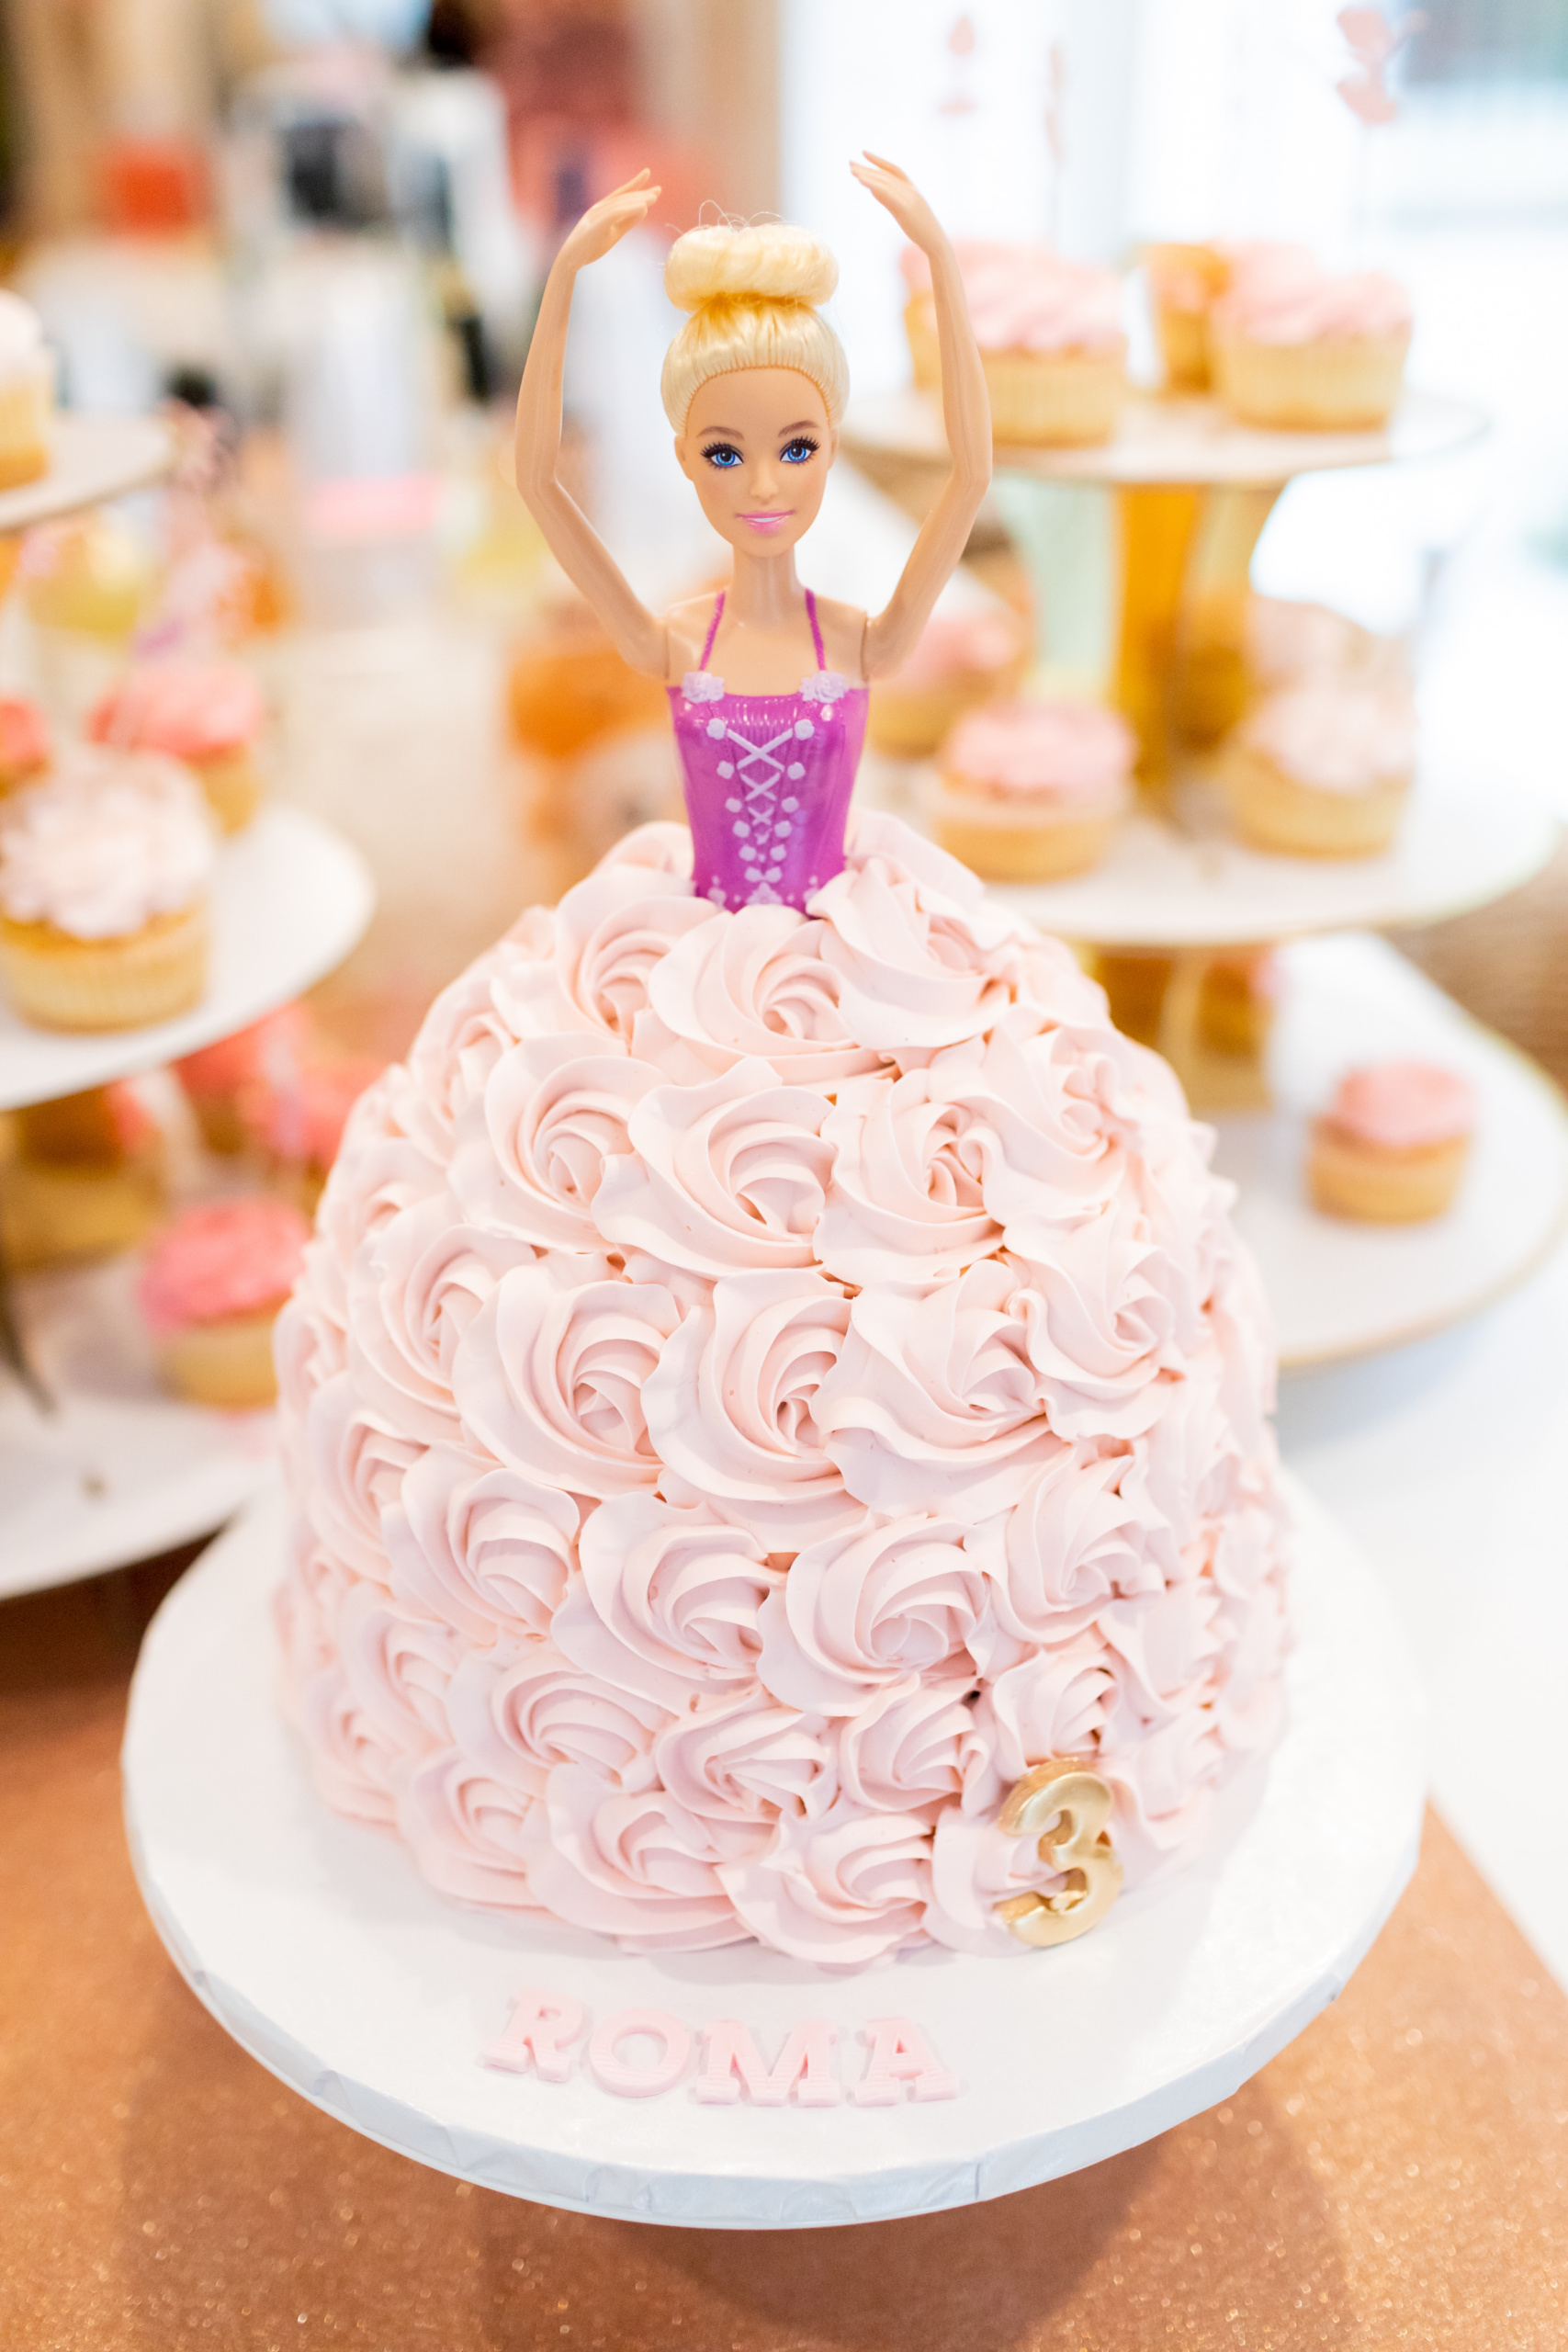 Adult Fun Cake, Bra Cake, Adult Cake, Novelty Cake